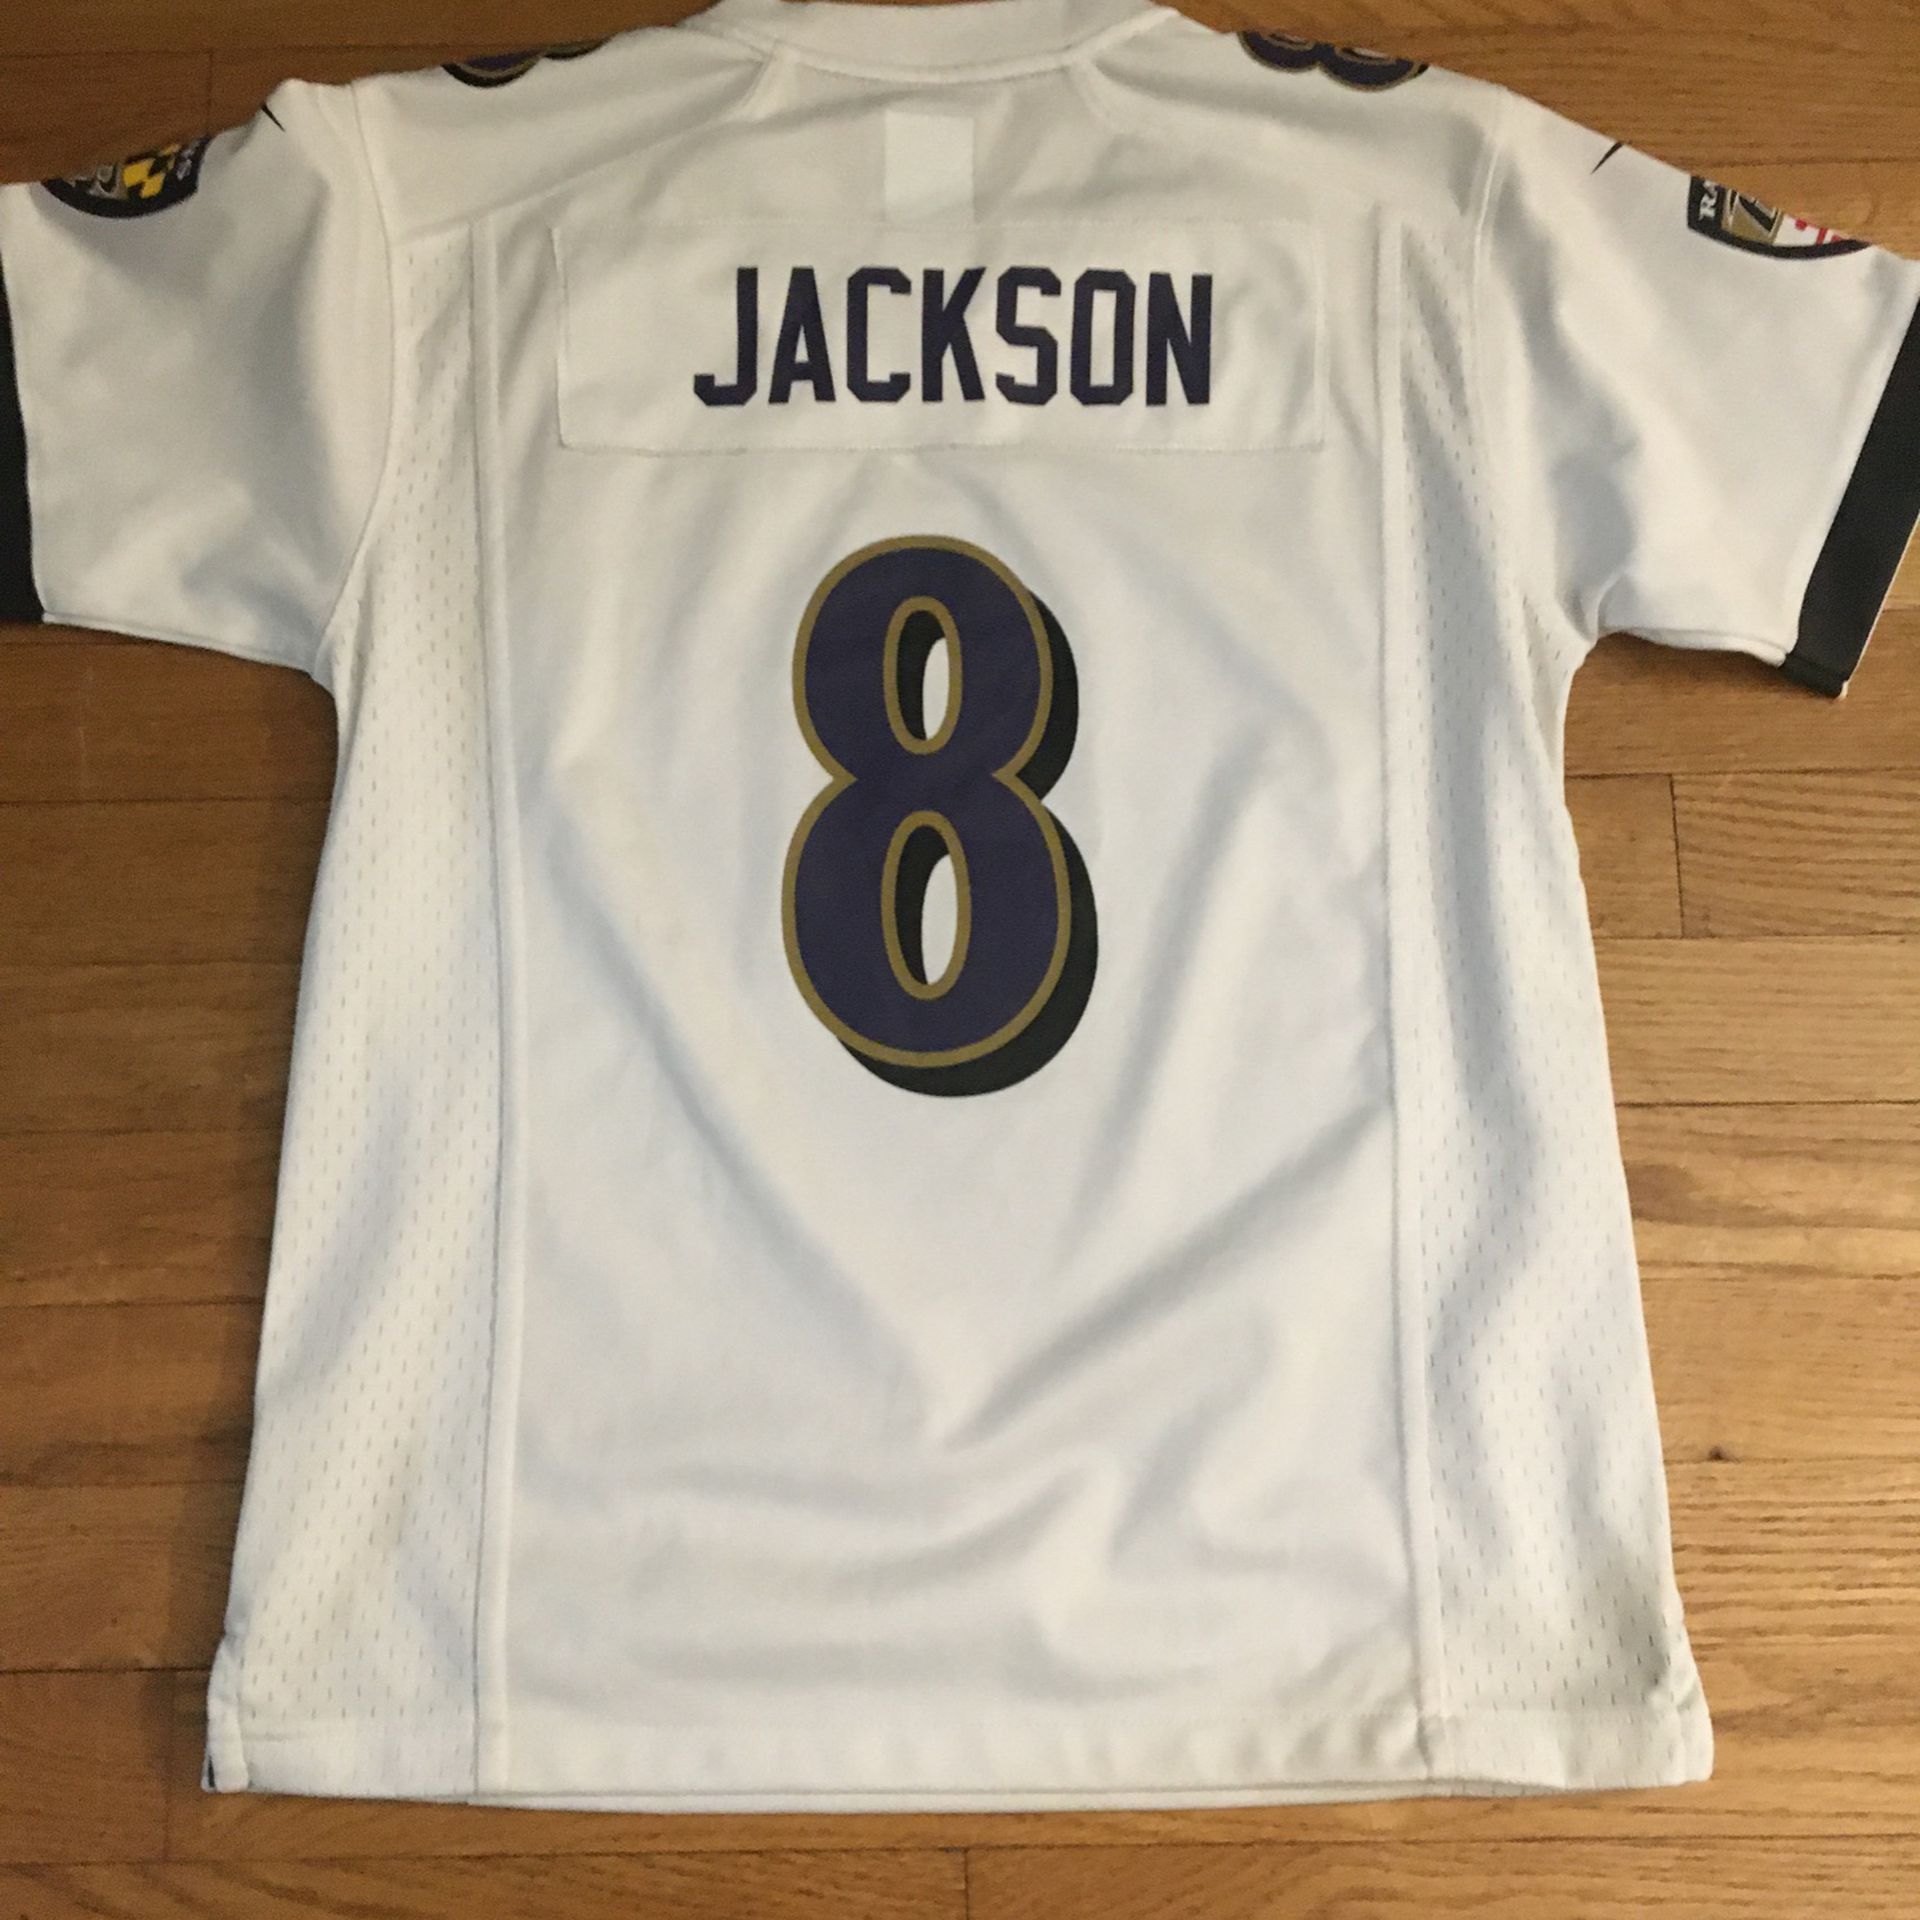 Baltimore Ravens Lamar Jackson Jersey for Sale in Gaithersburg